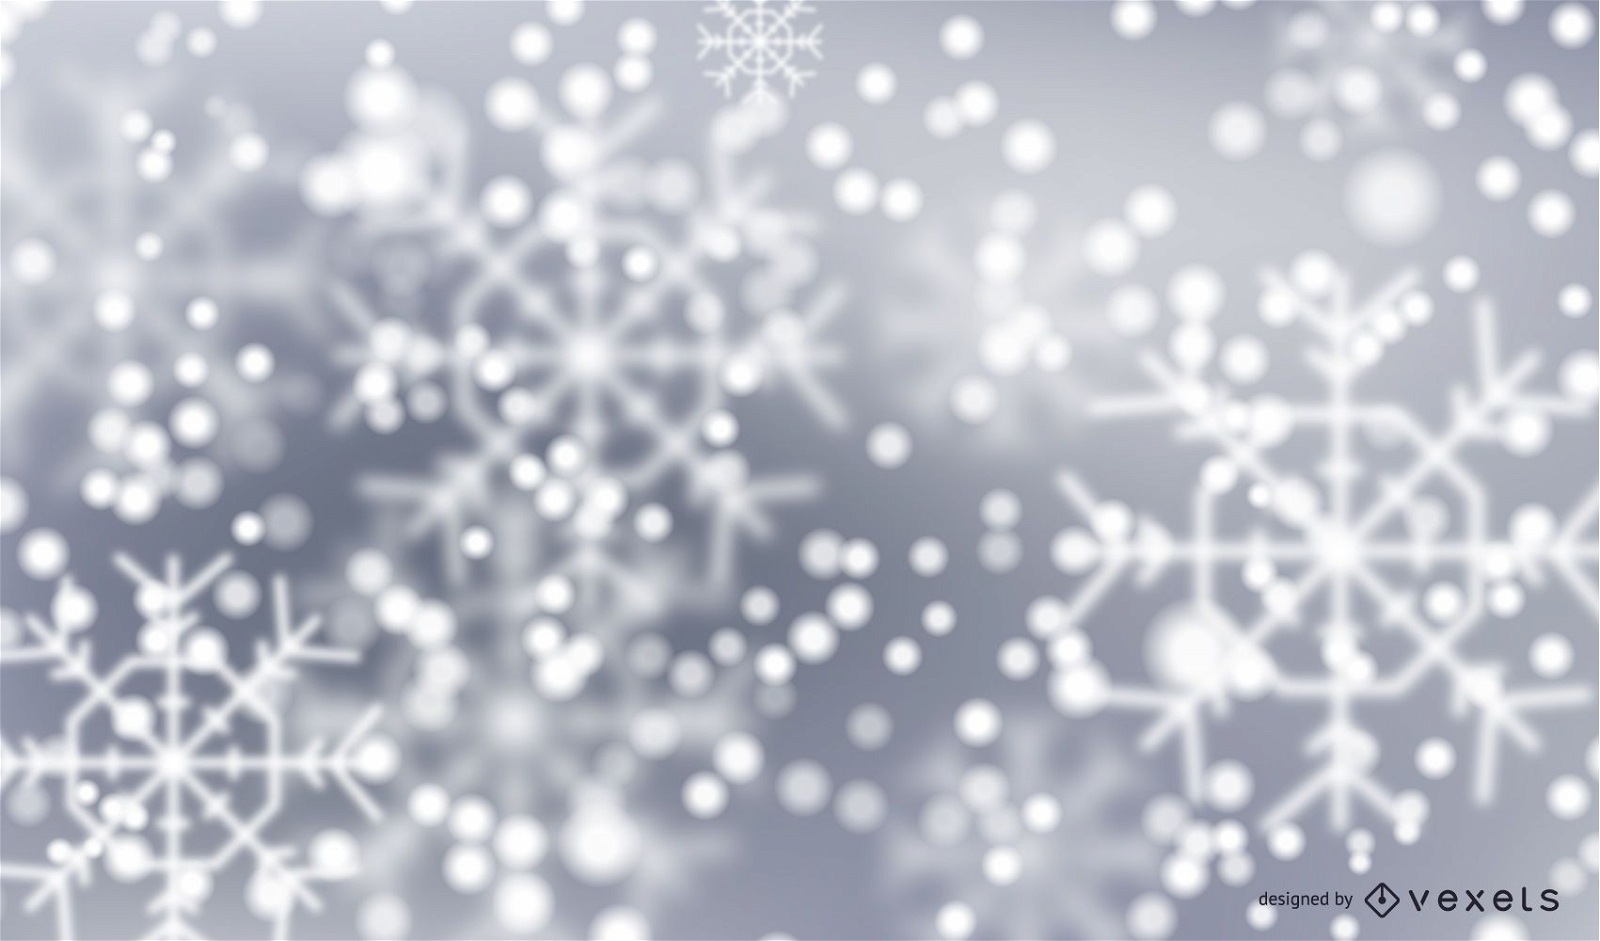 Bokeh snowflakes winter background